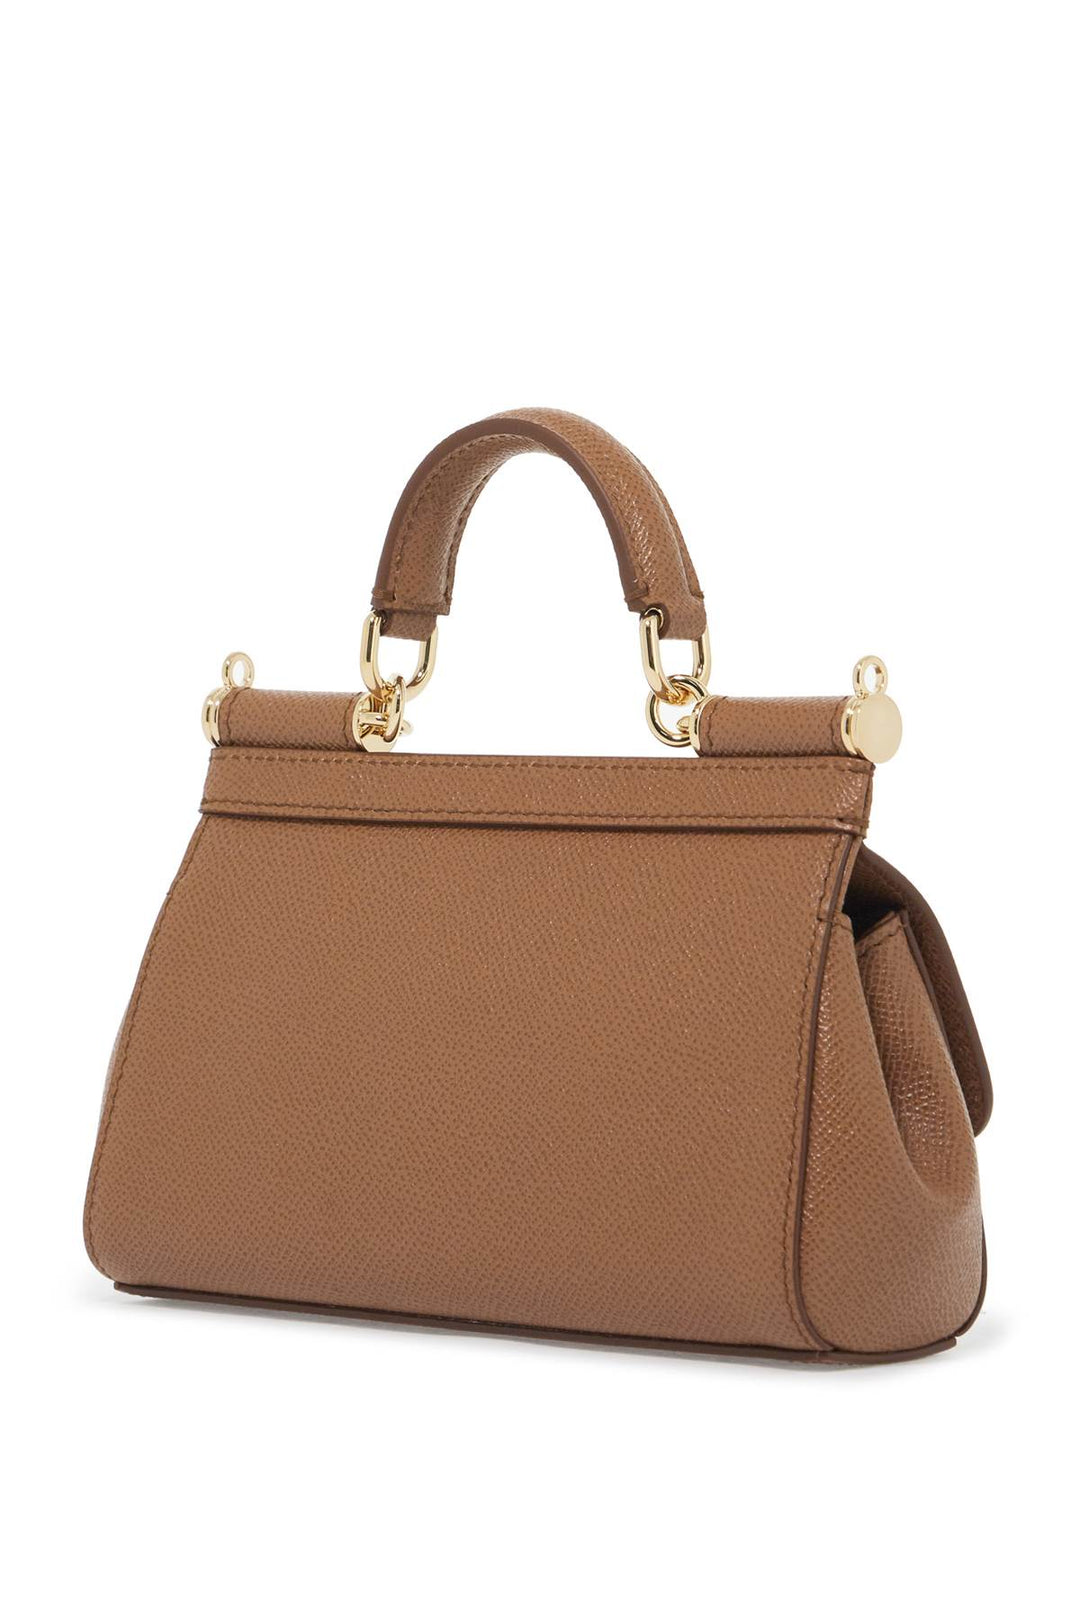 Dolce & Gabbana Sicily Small Handbag   Brown